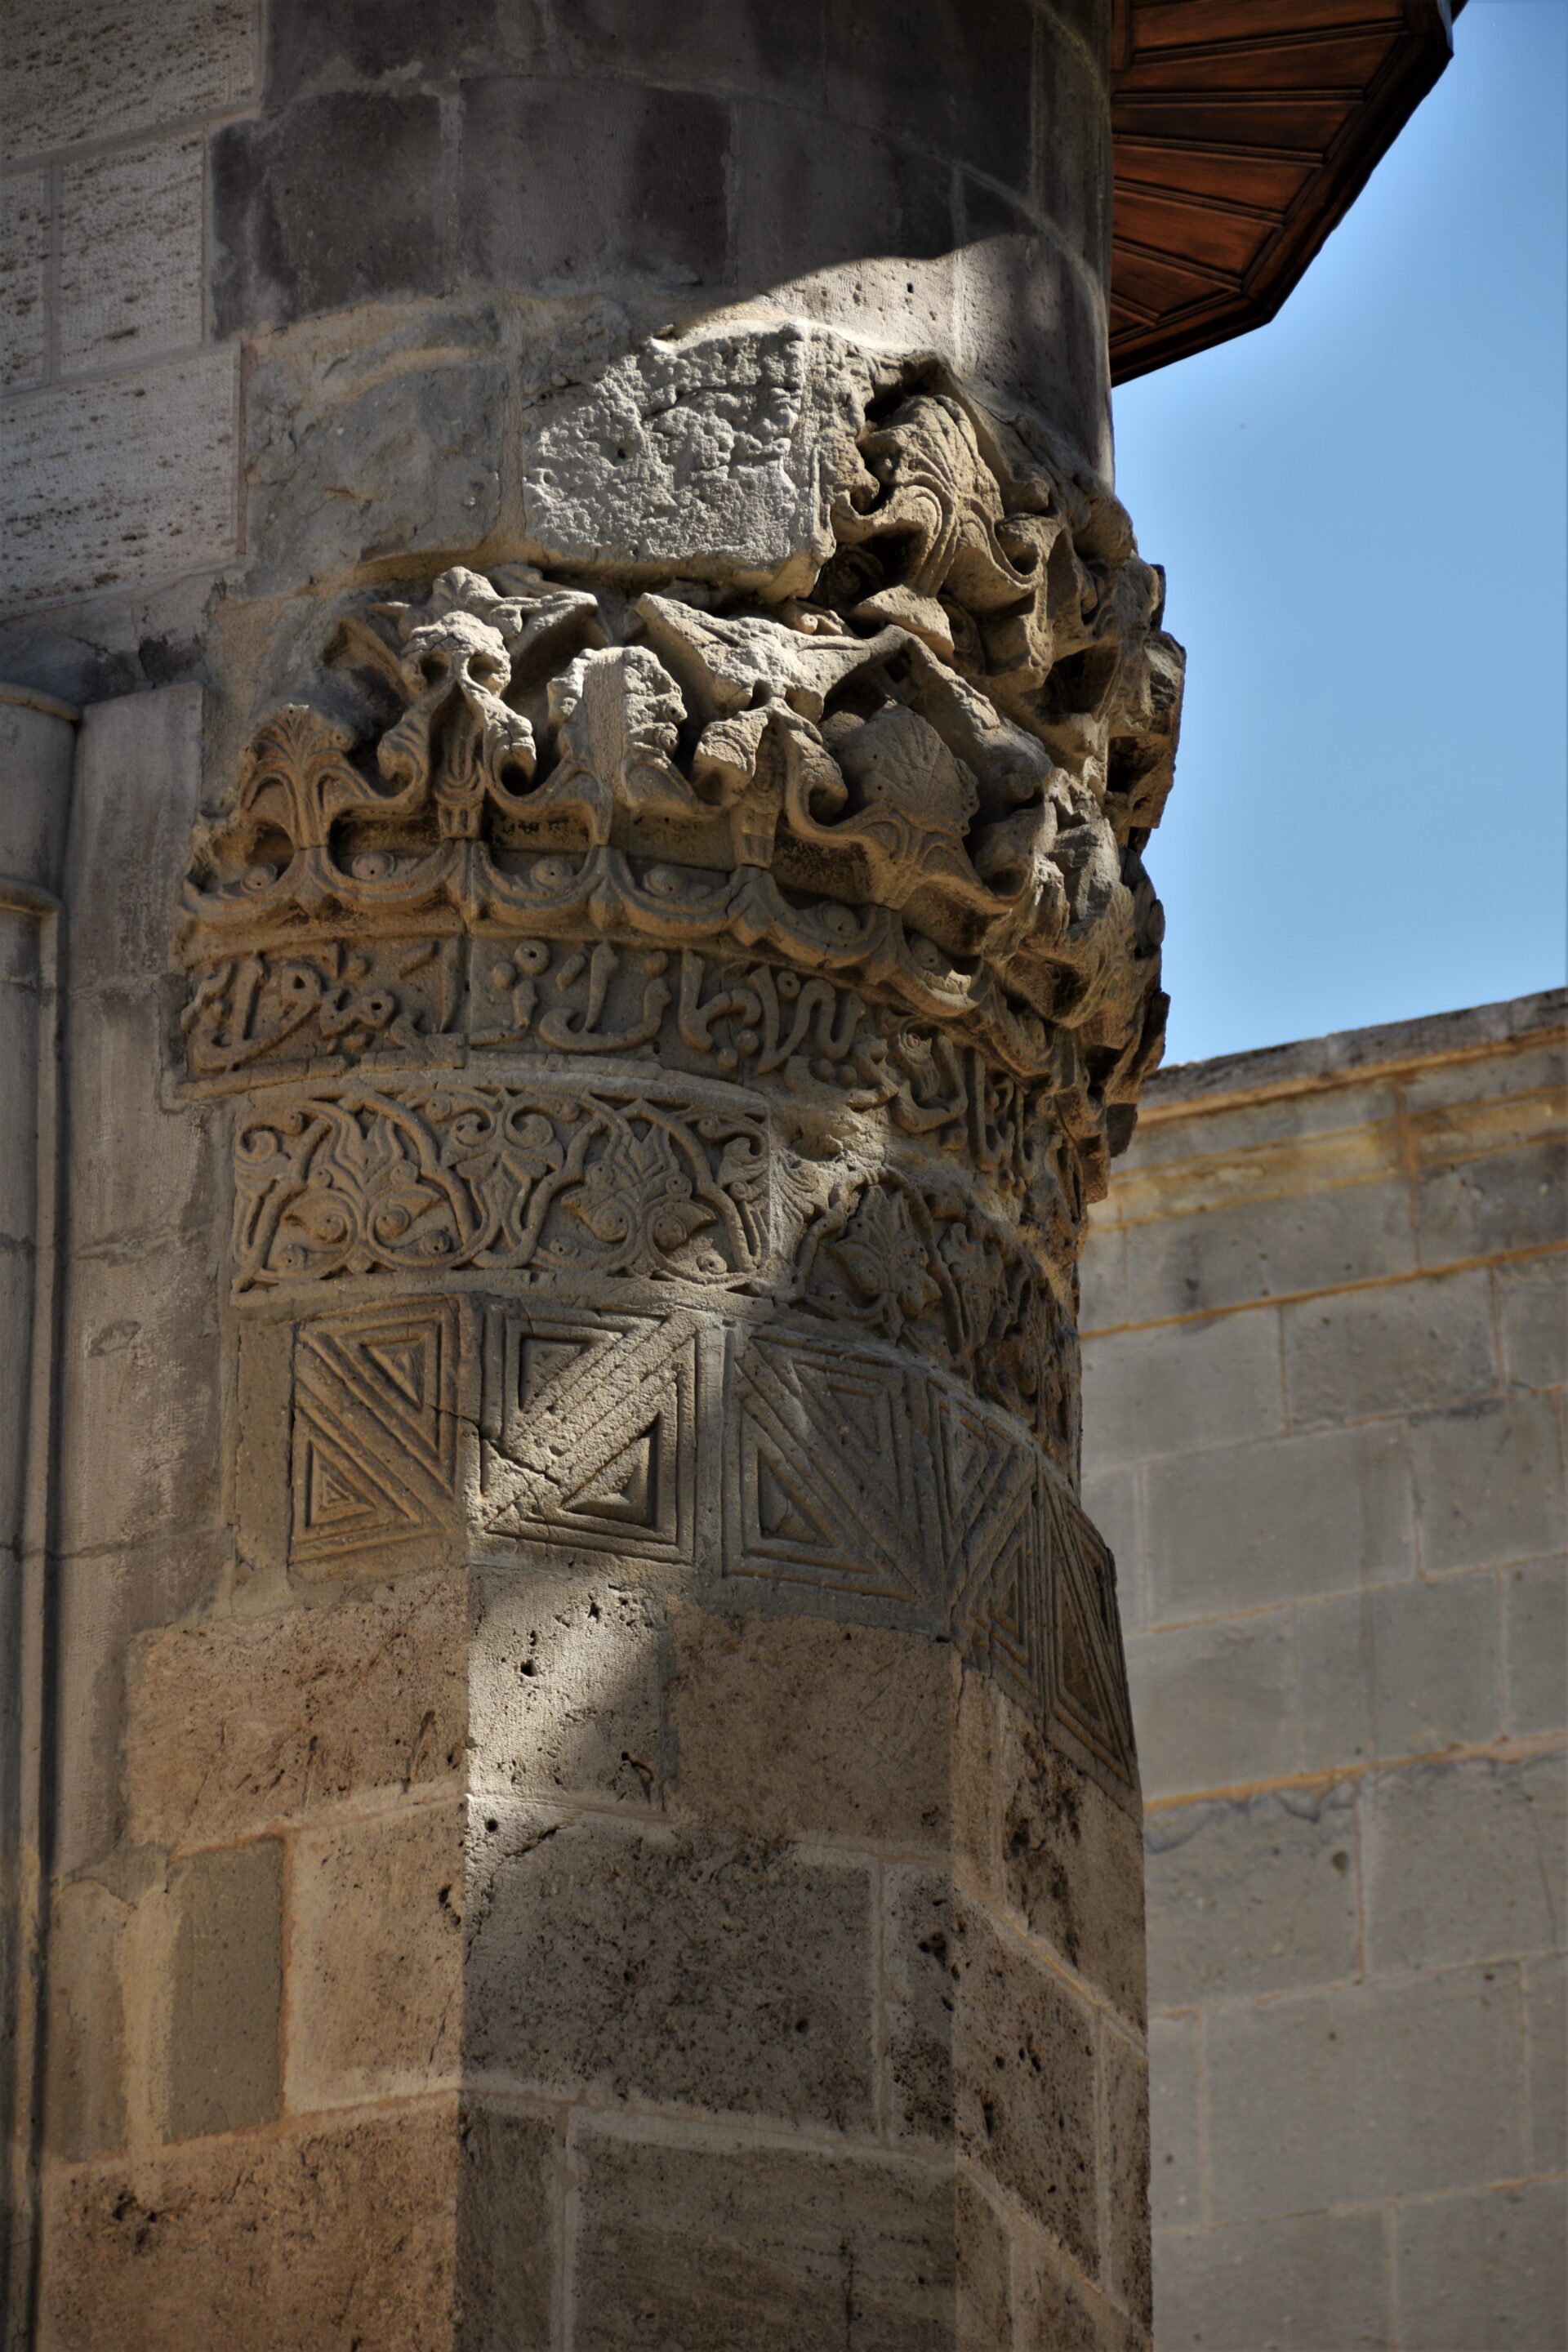 richly ornamented corner column of a Seljuk tomb